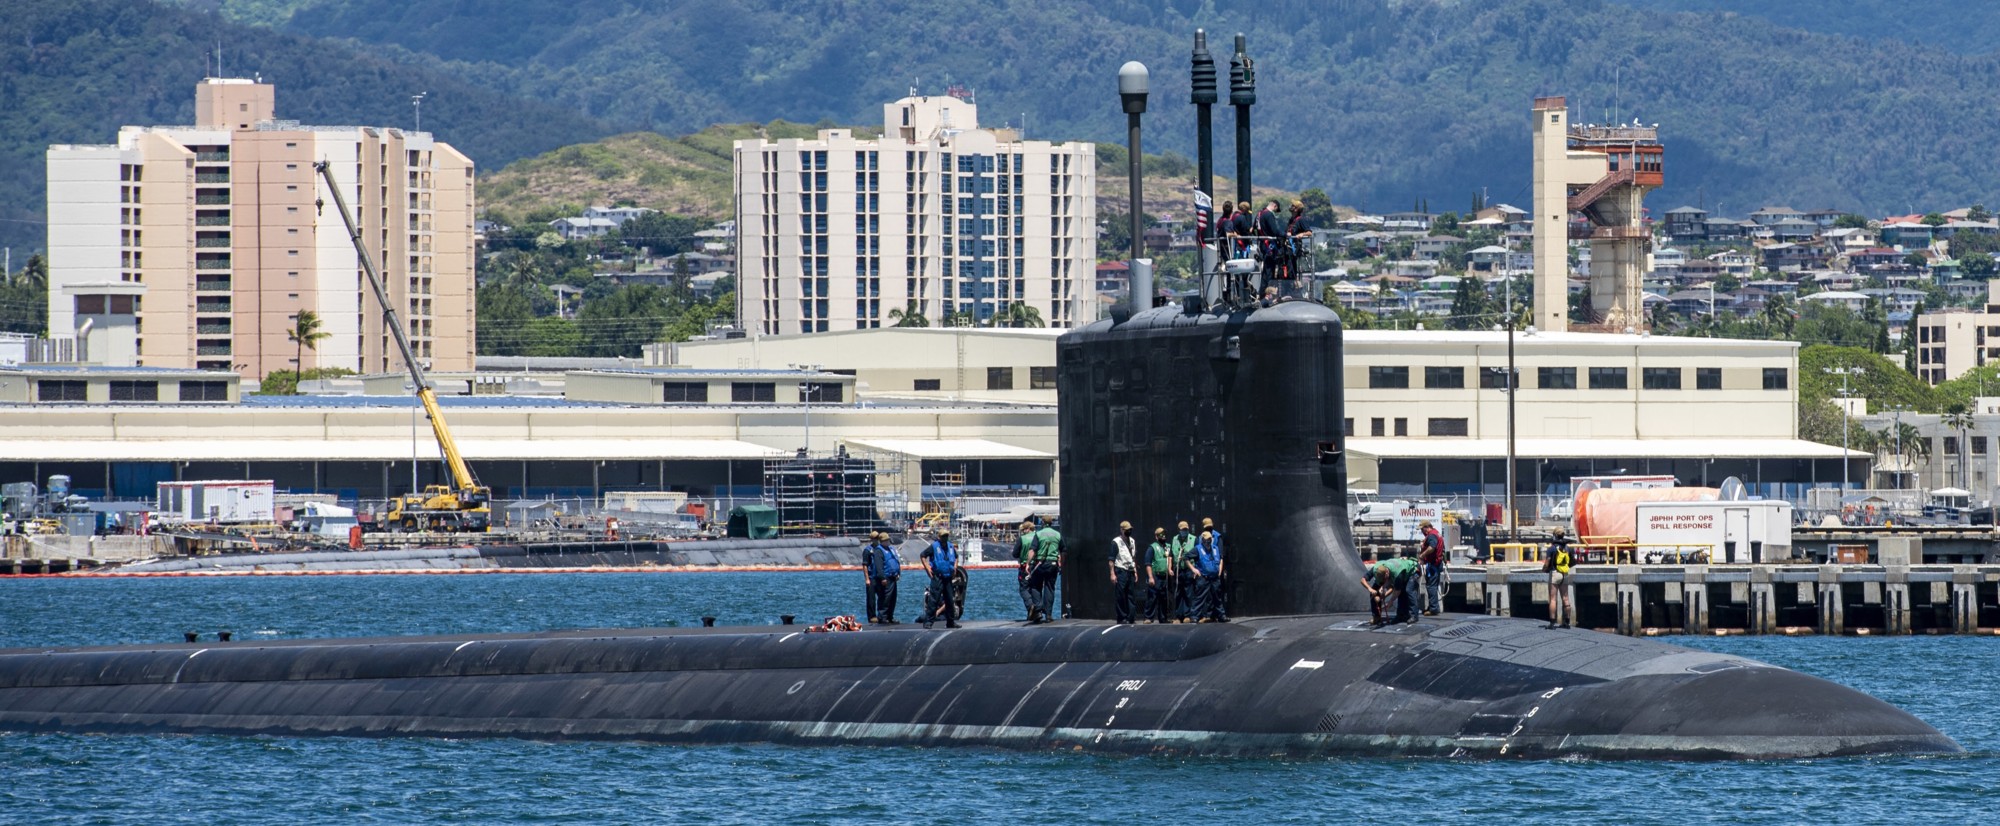 ssn-780 uss missouri virginia class attack submarine us navy 55 pearl harbor naval shipyard imf hawaii